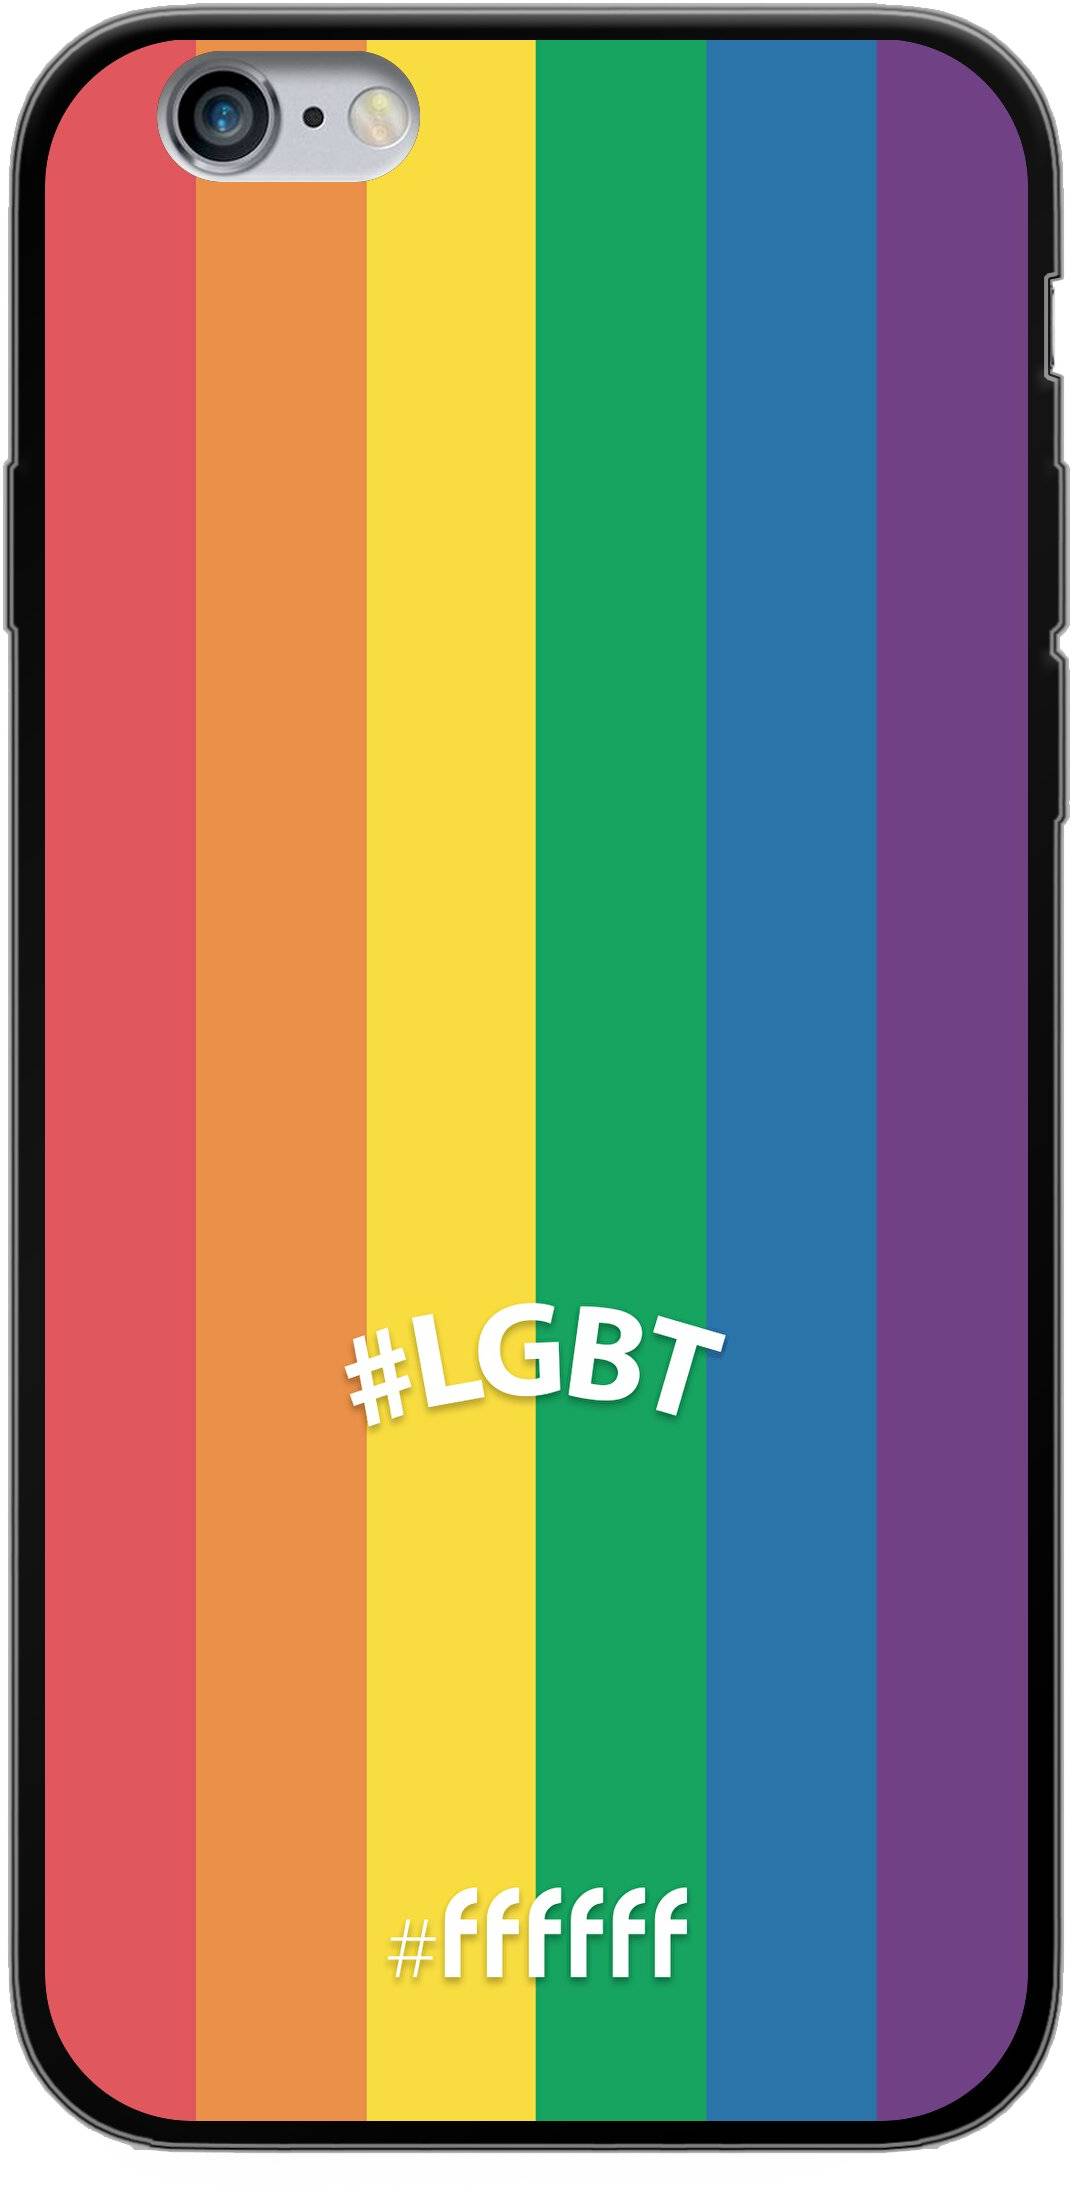 #LGBT - #LGBT iPhone 6